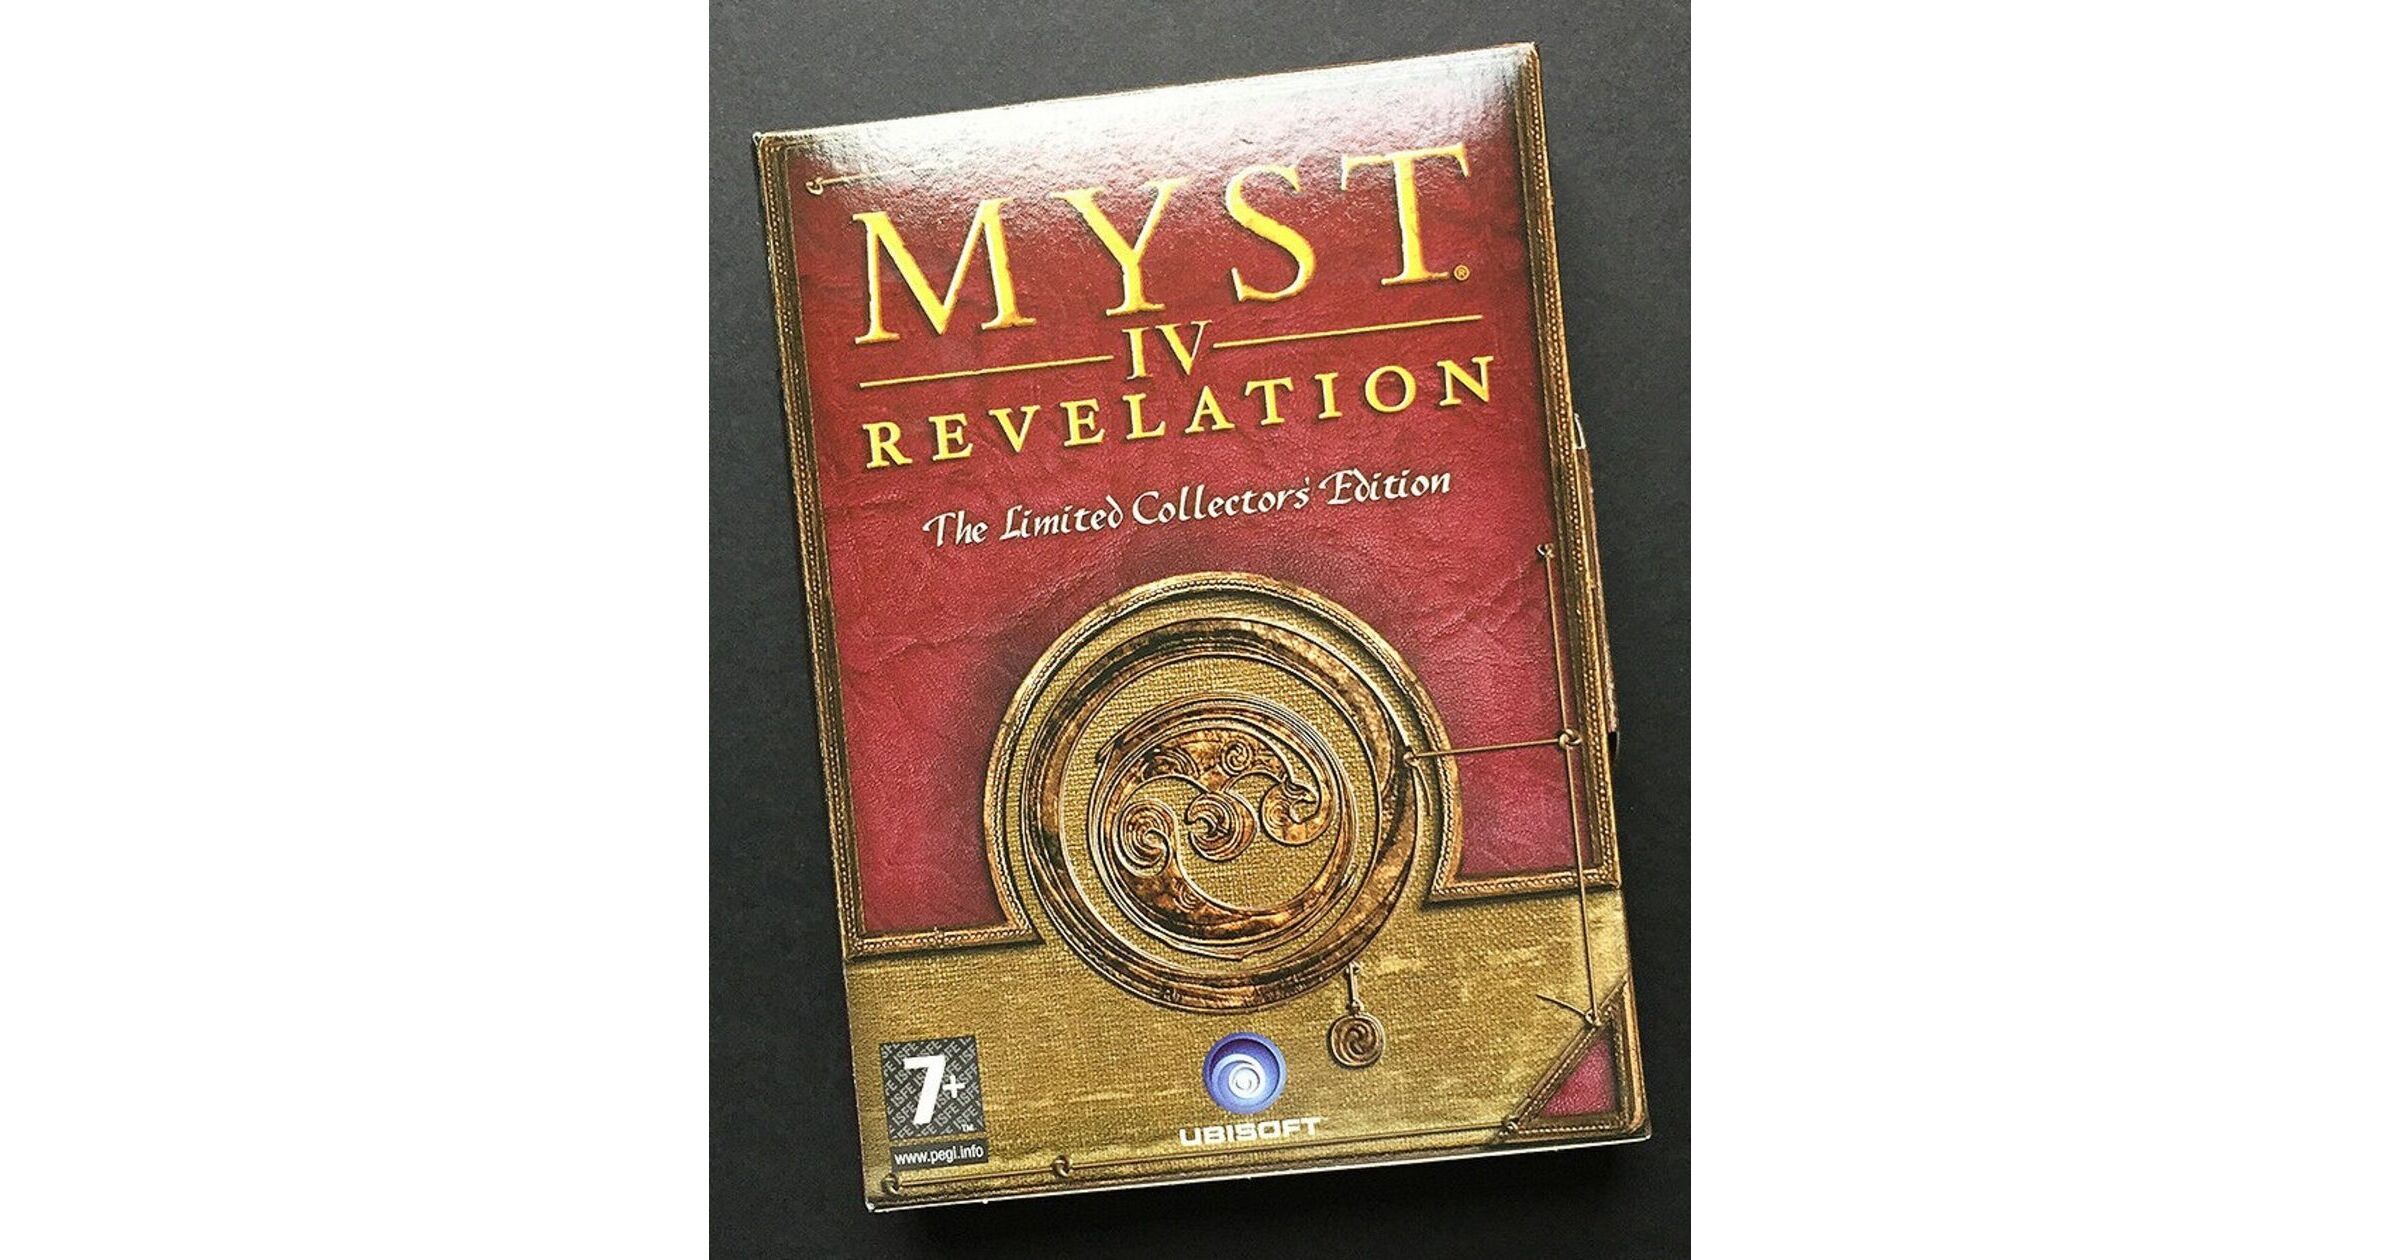 myst iv revelation mp3